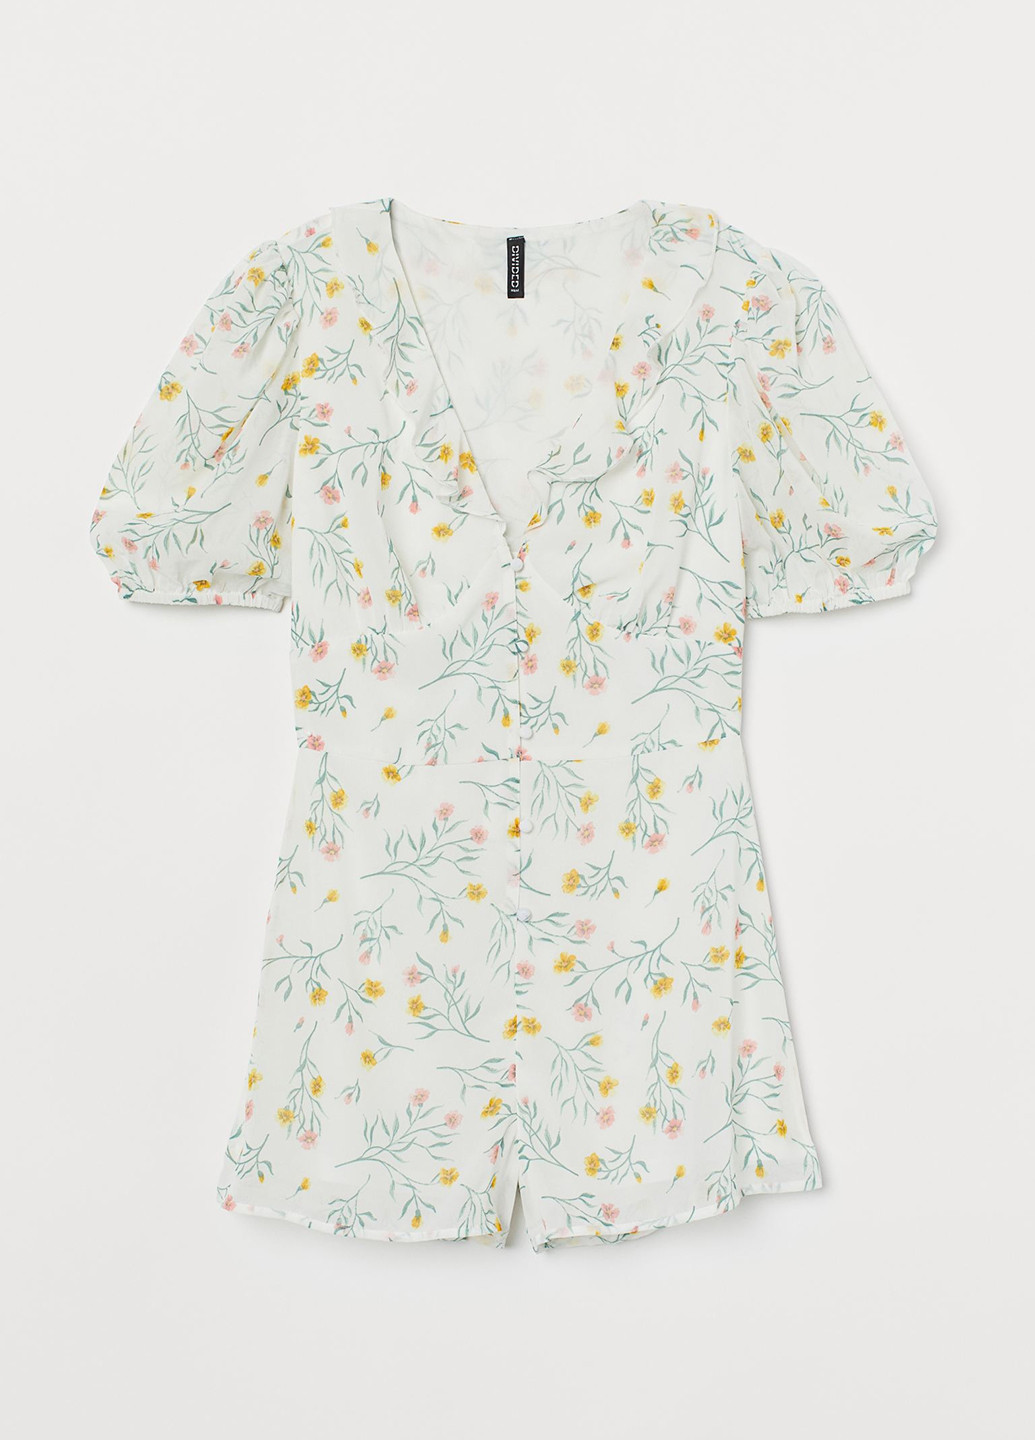 Комбинезон H&M комбинезон-шорты цветочный белый кэжуал полиэстер